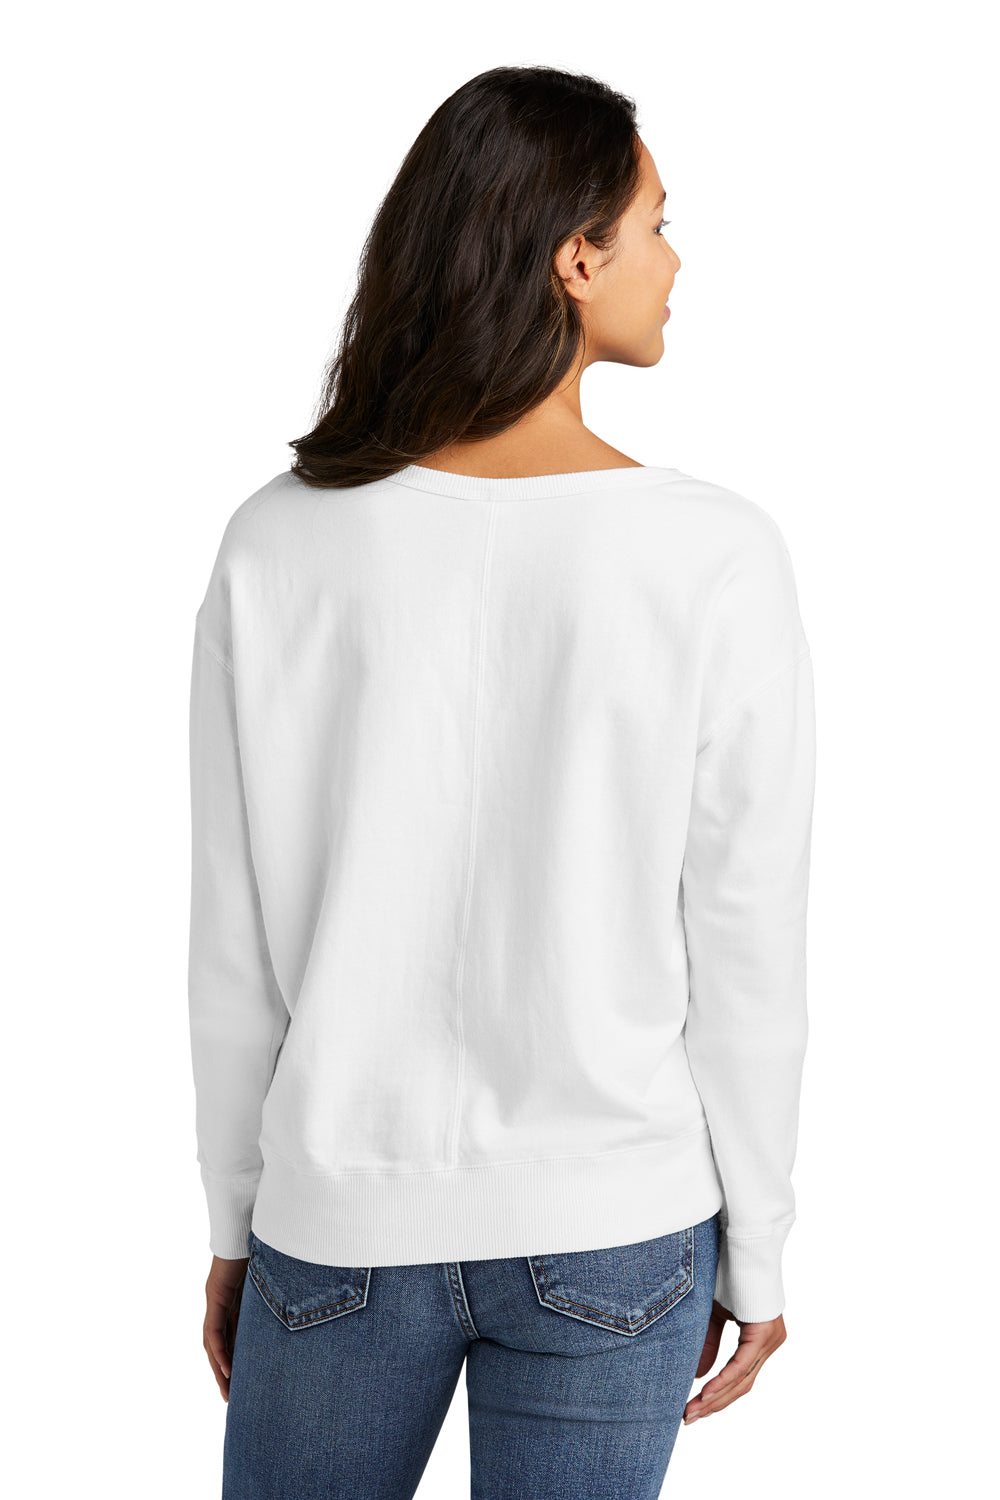 Port & Company LPC098V Womens Beach Wash Garment Dyed V-Neck Sweatshirt White Back